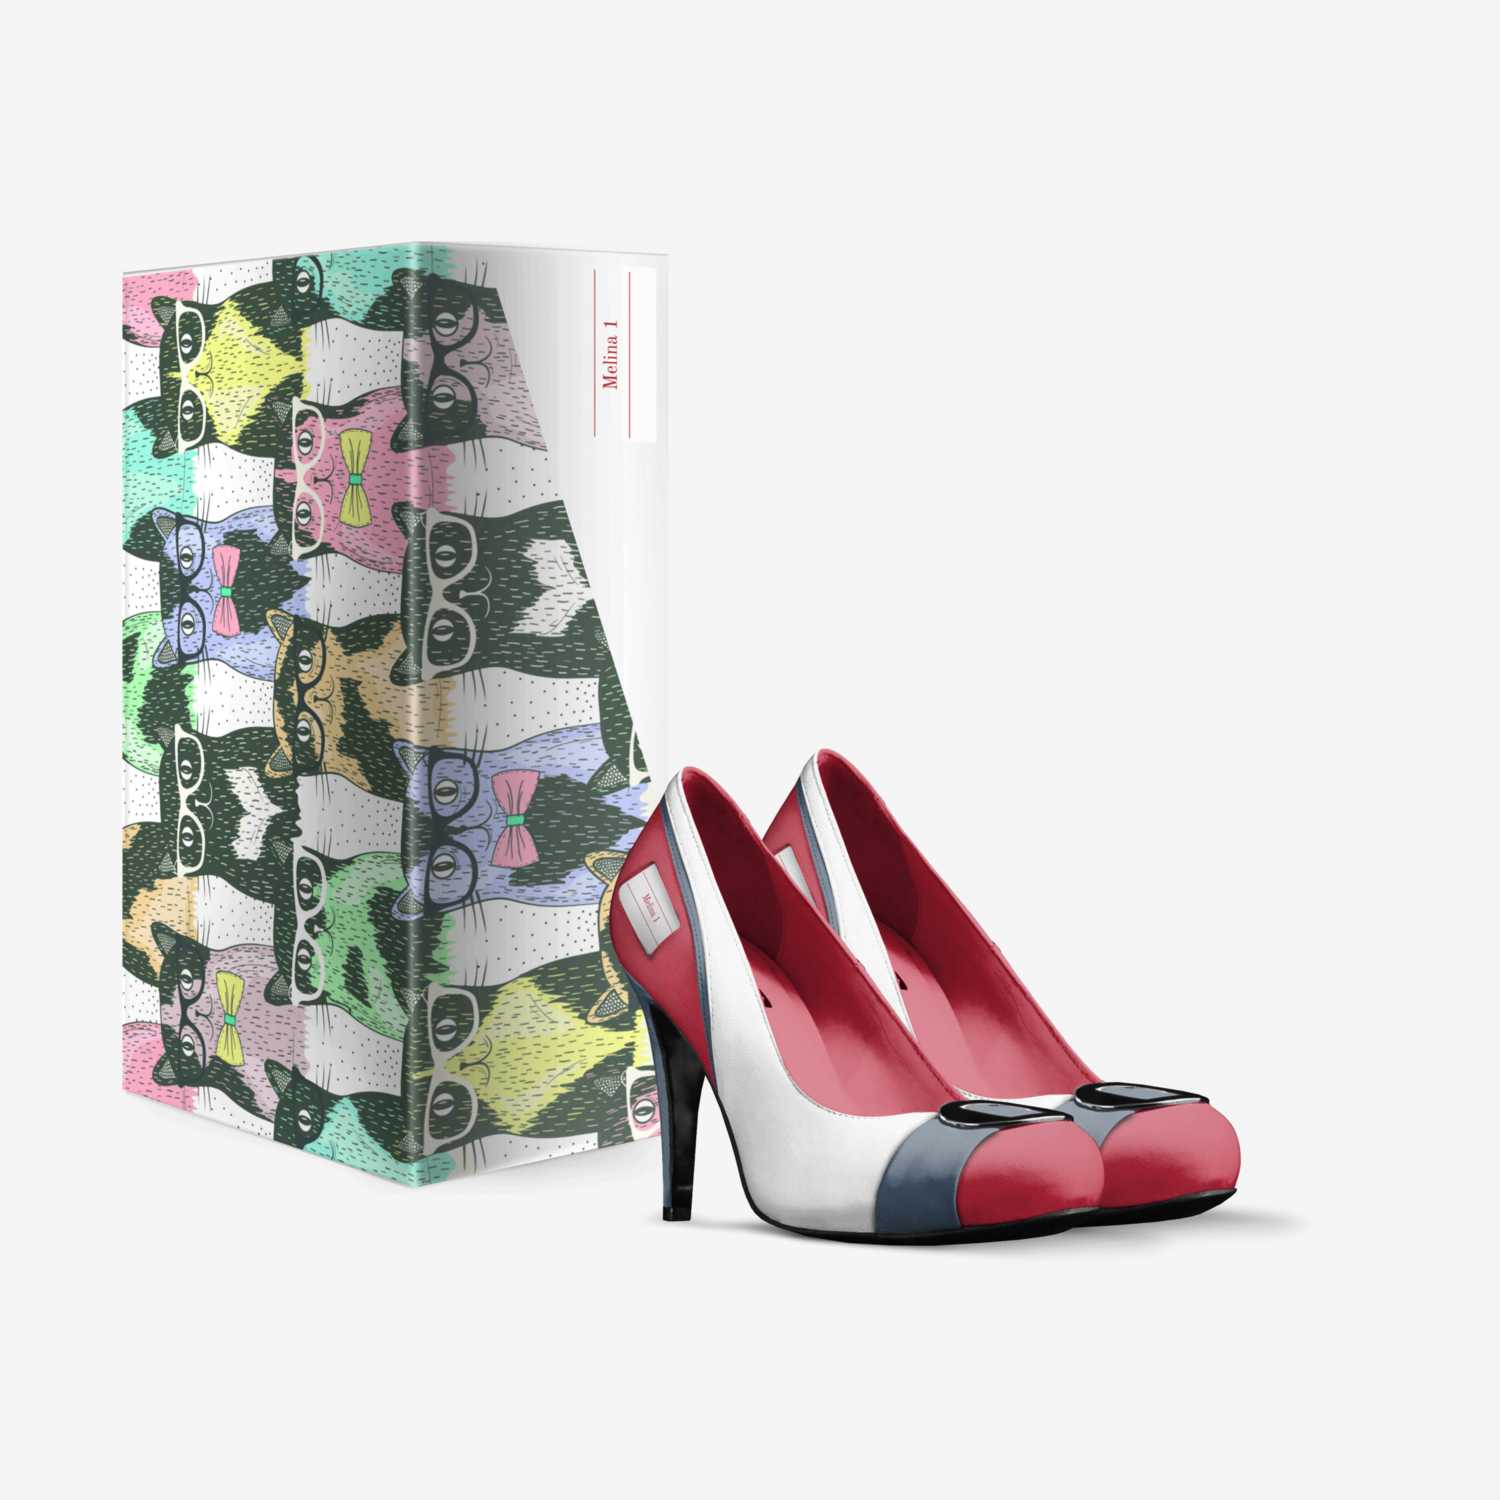 Melina 1 custom made in Italy shoes by Francesco Florindi | Box view